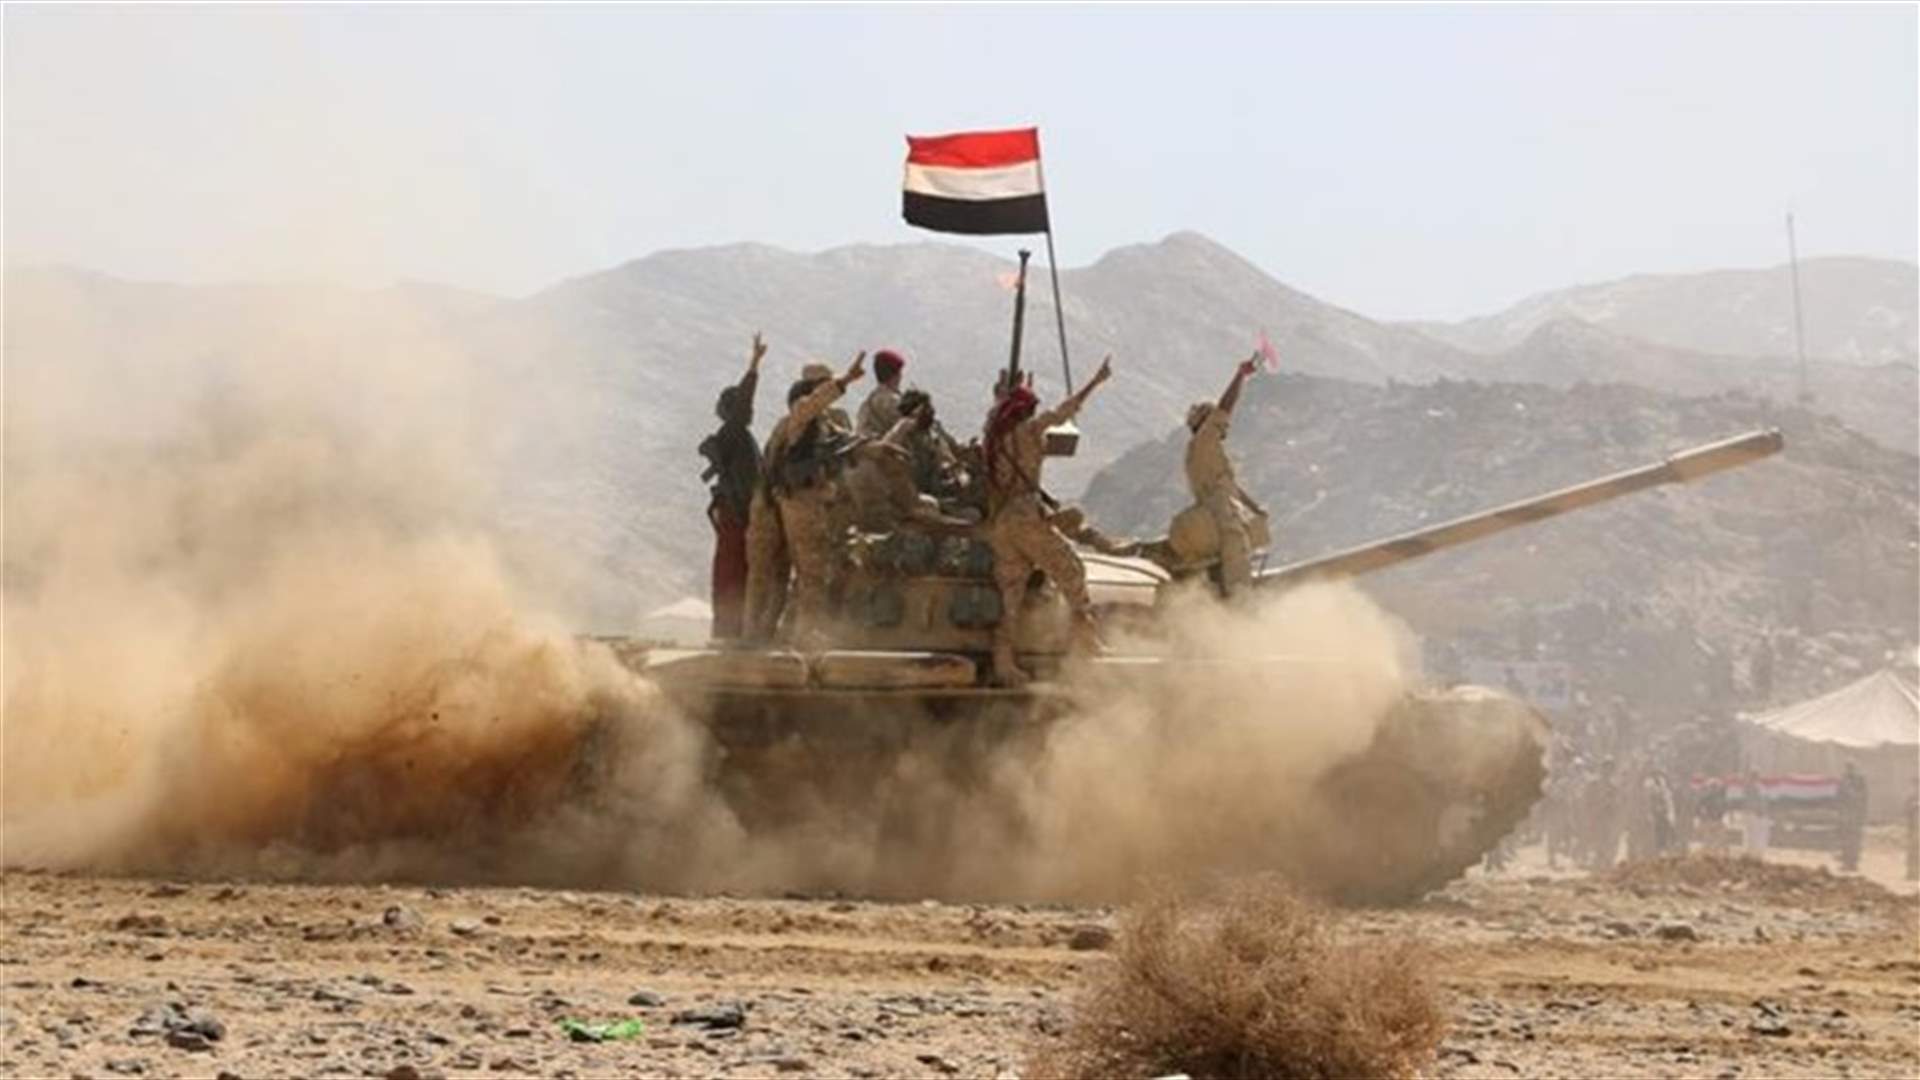 Arab forces kill six Al Qaeda fighters in Yemen - security official